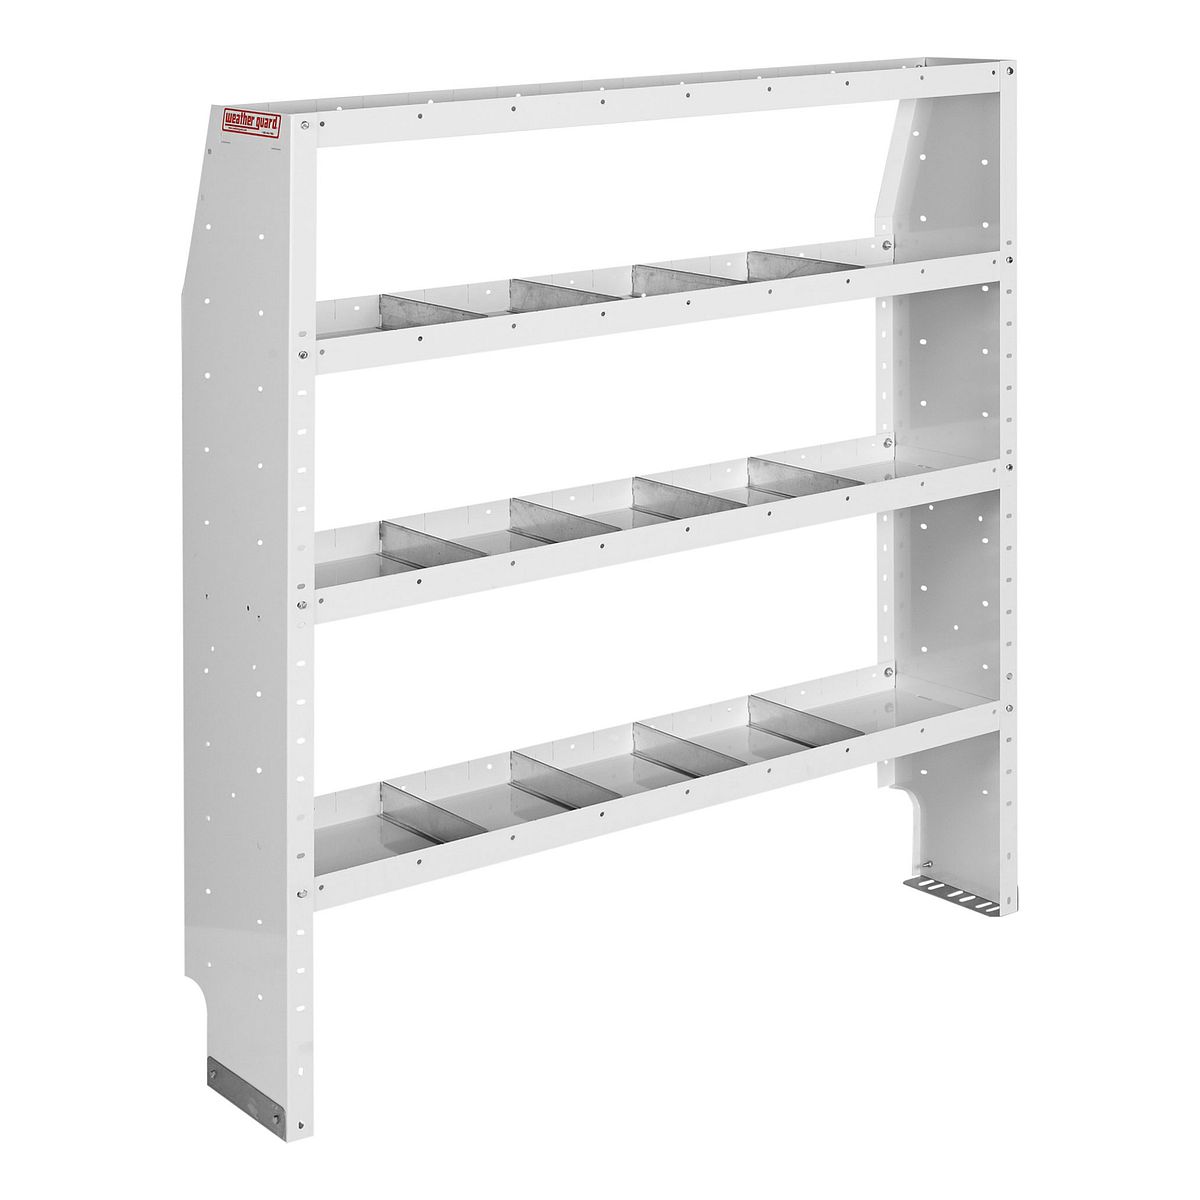 Adjustable 4 Shelf Unit - 60 in. x 52 in. x 13.5 in.